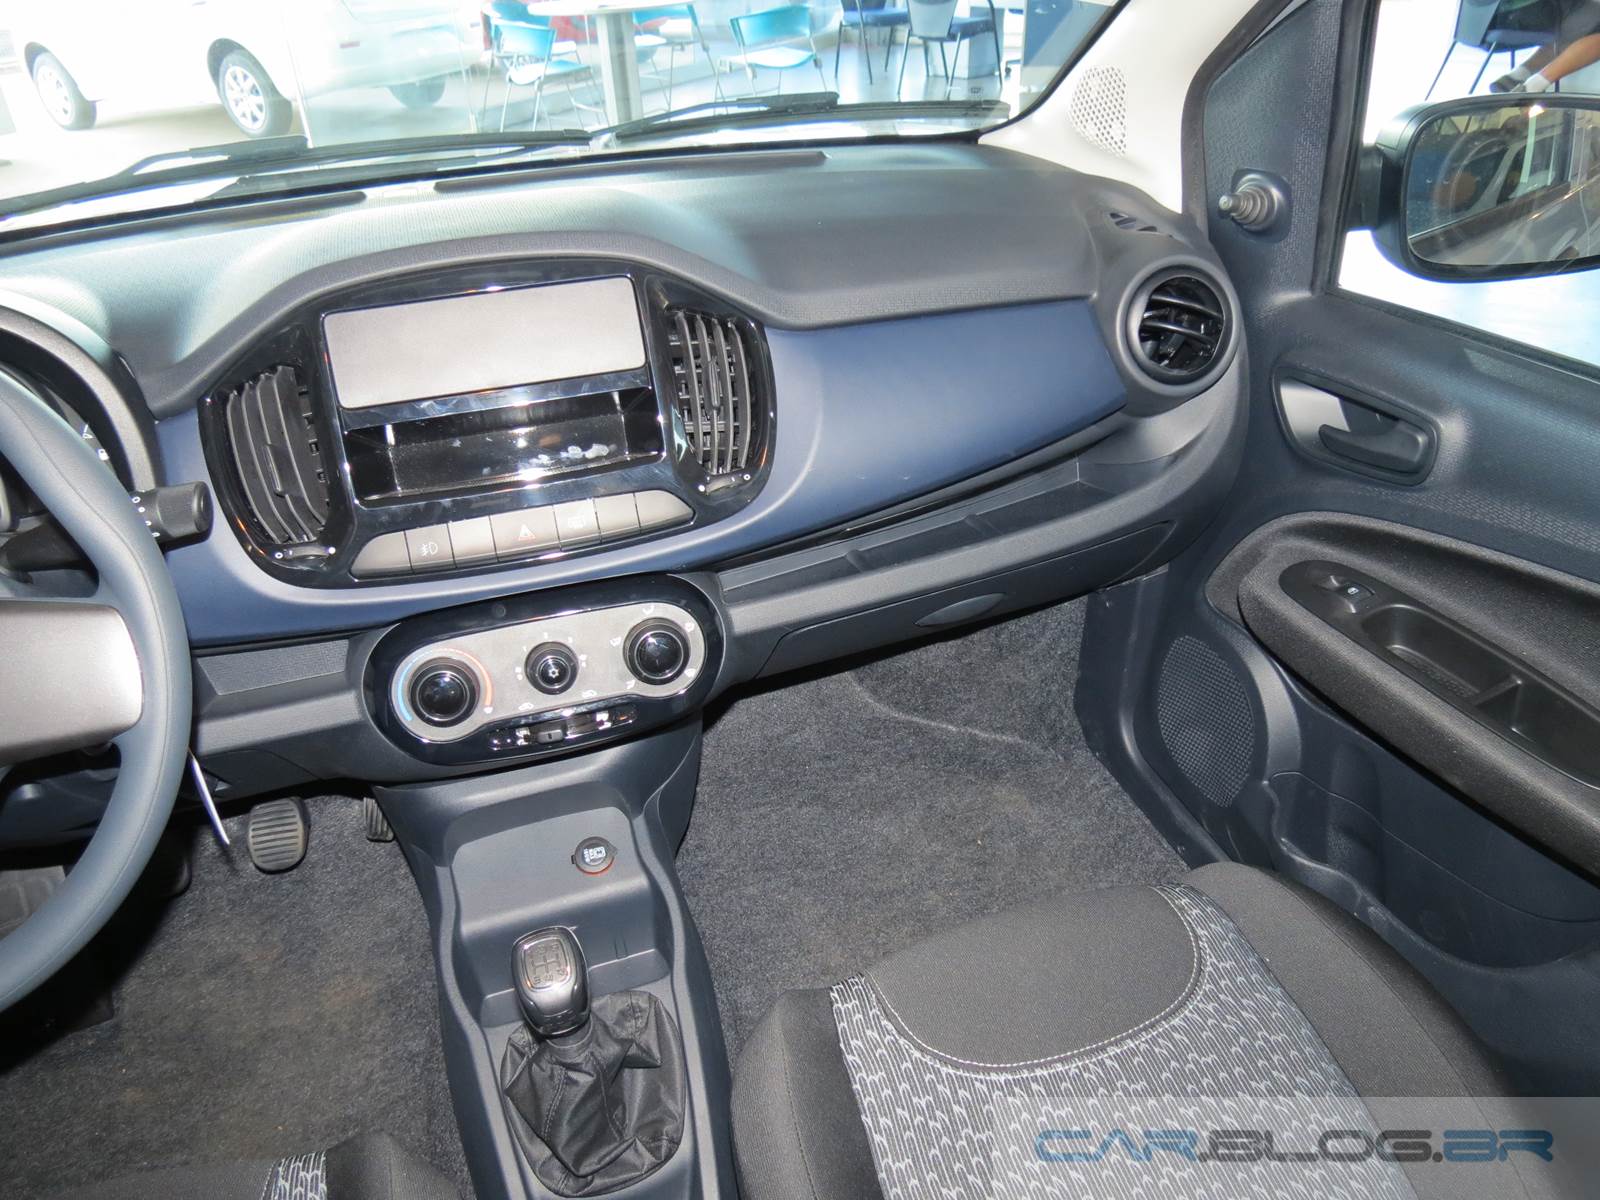 Novo Fiat Uno Attractive 1.0 2015 - interior